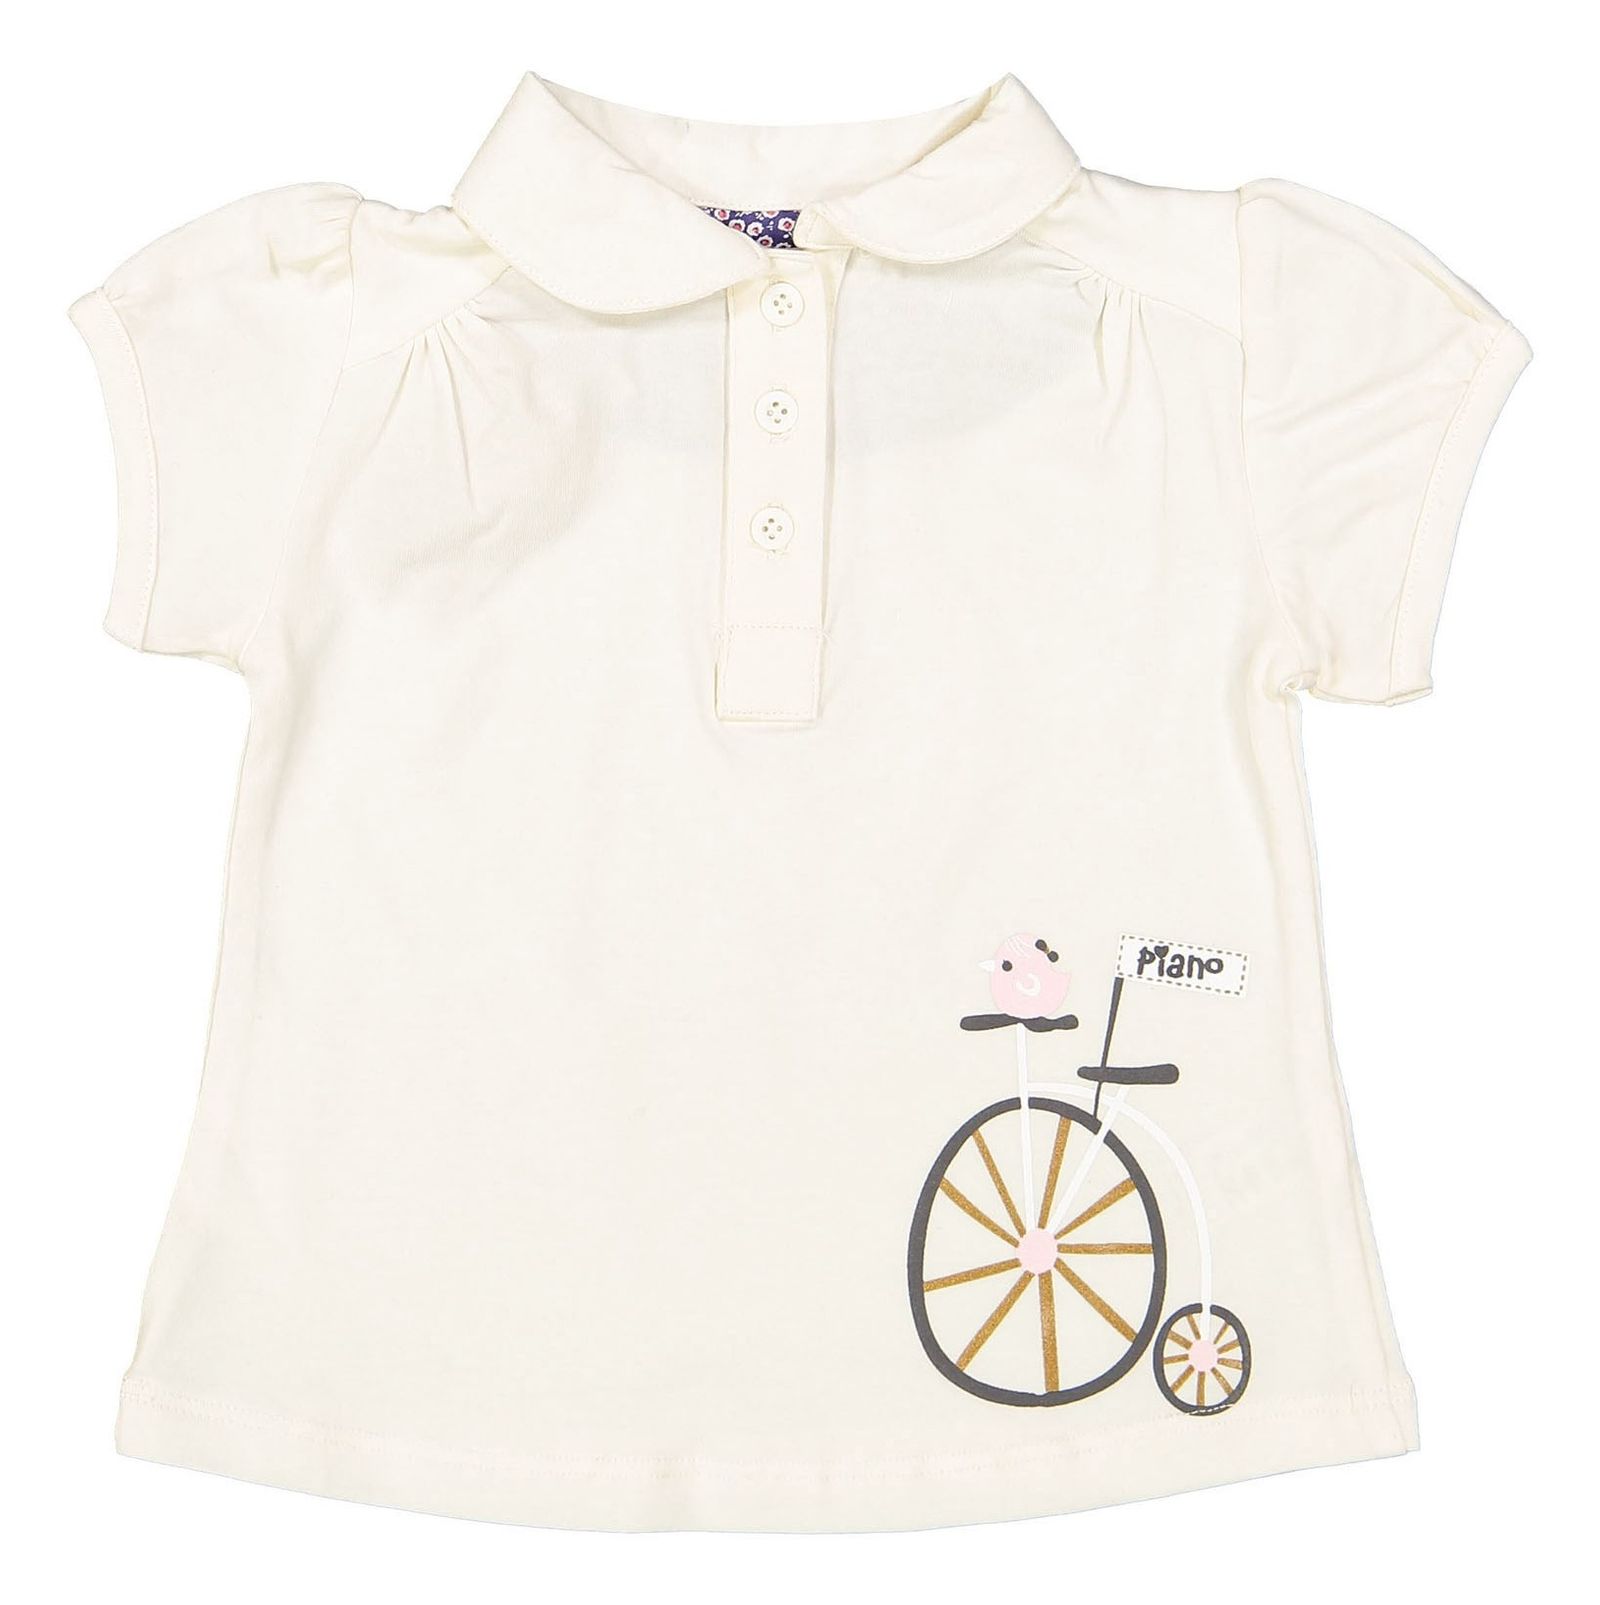 تی شرت و شلوارک نخی نوزادی دخترانه - پیانو - شيري و زغالي - 3